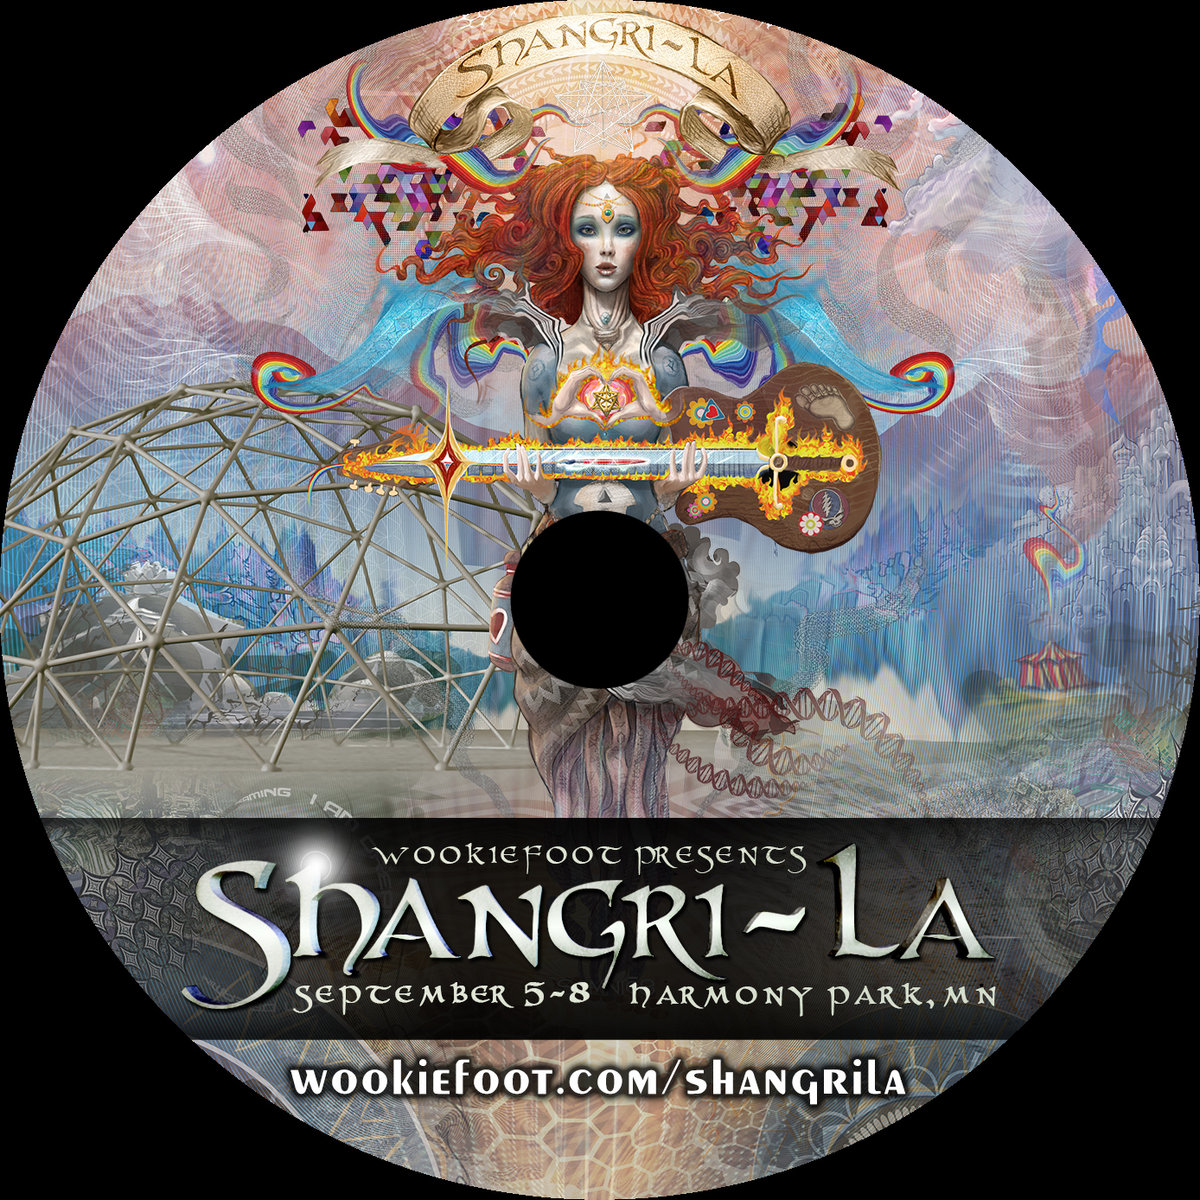 Shangri - La 2015 Streaming Sampler | Shangri La Festival